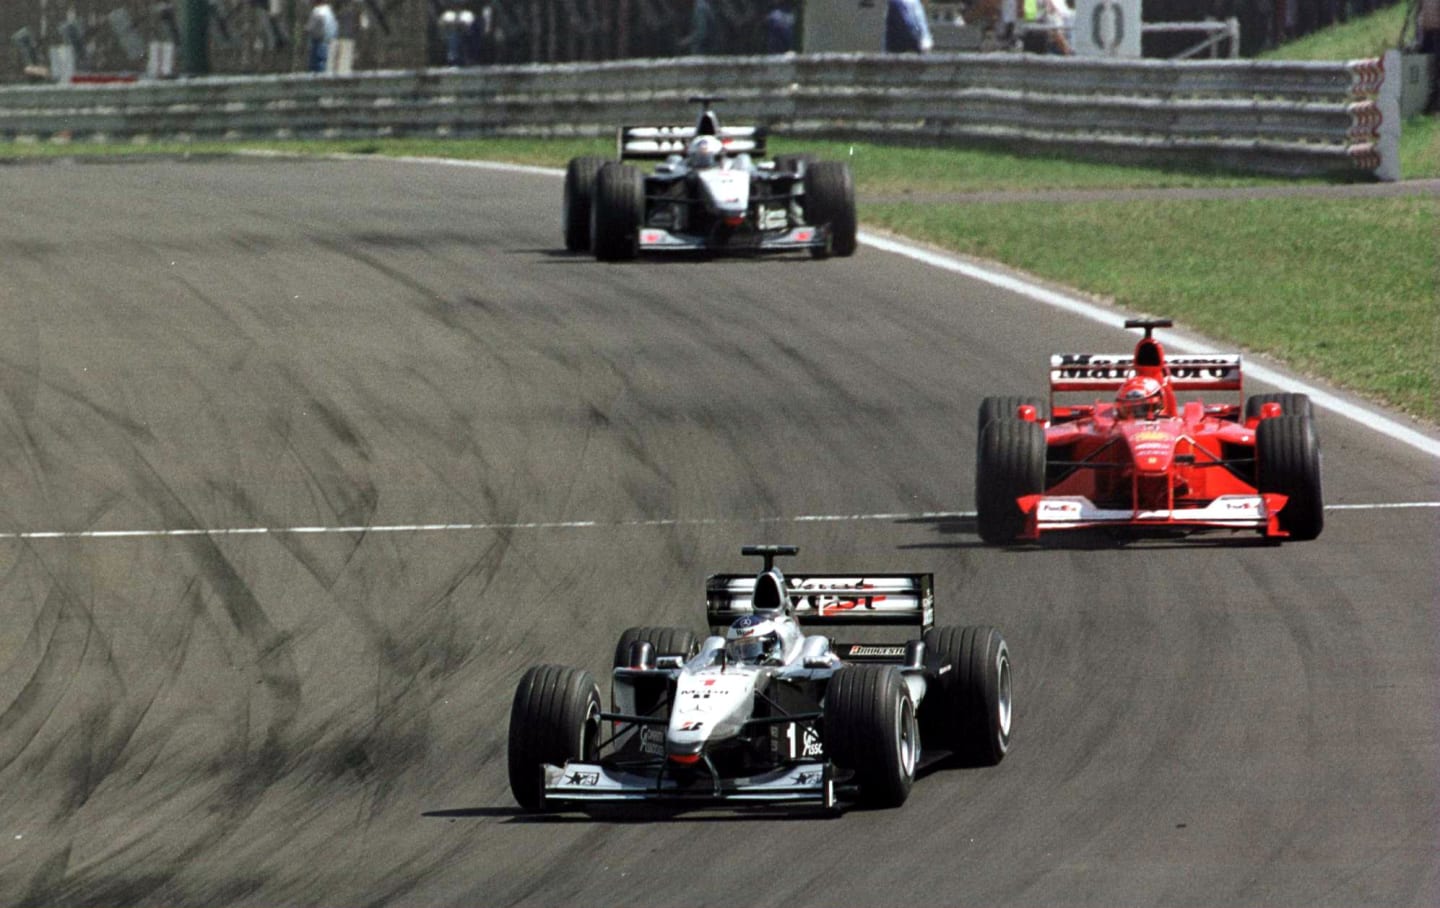 13 Aug 2000: Mika Hakkinen of Finland and McLaren leads the field ahead of Michael Schumacher of